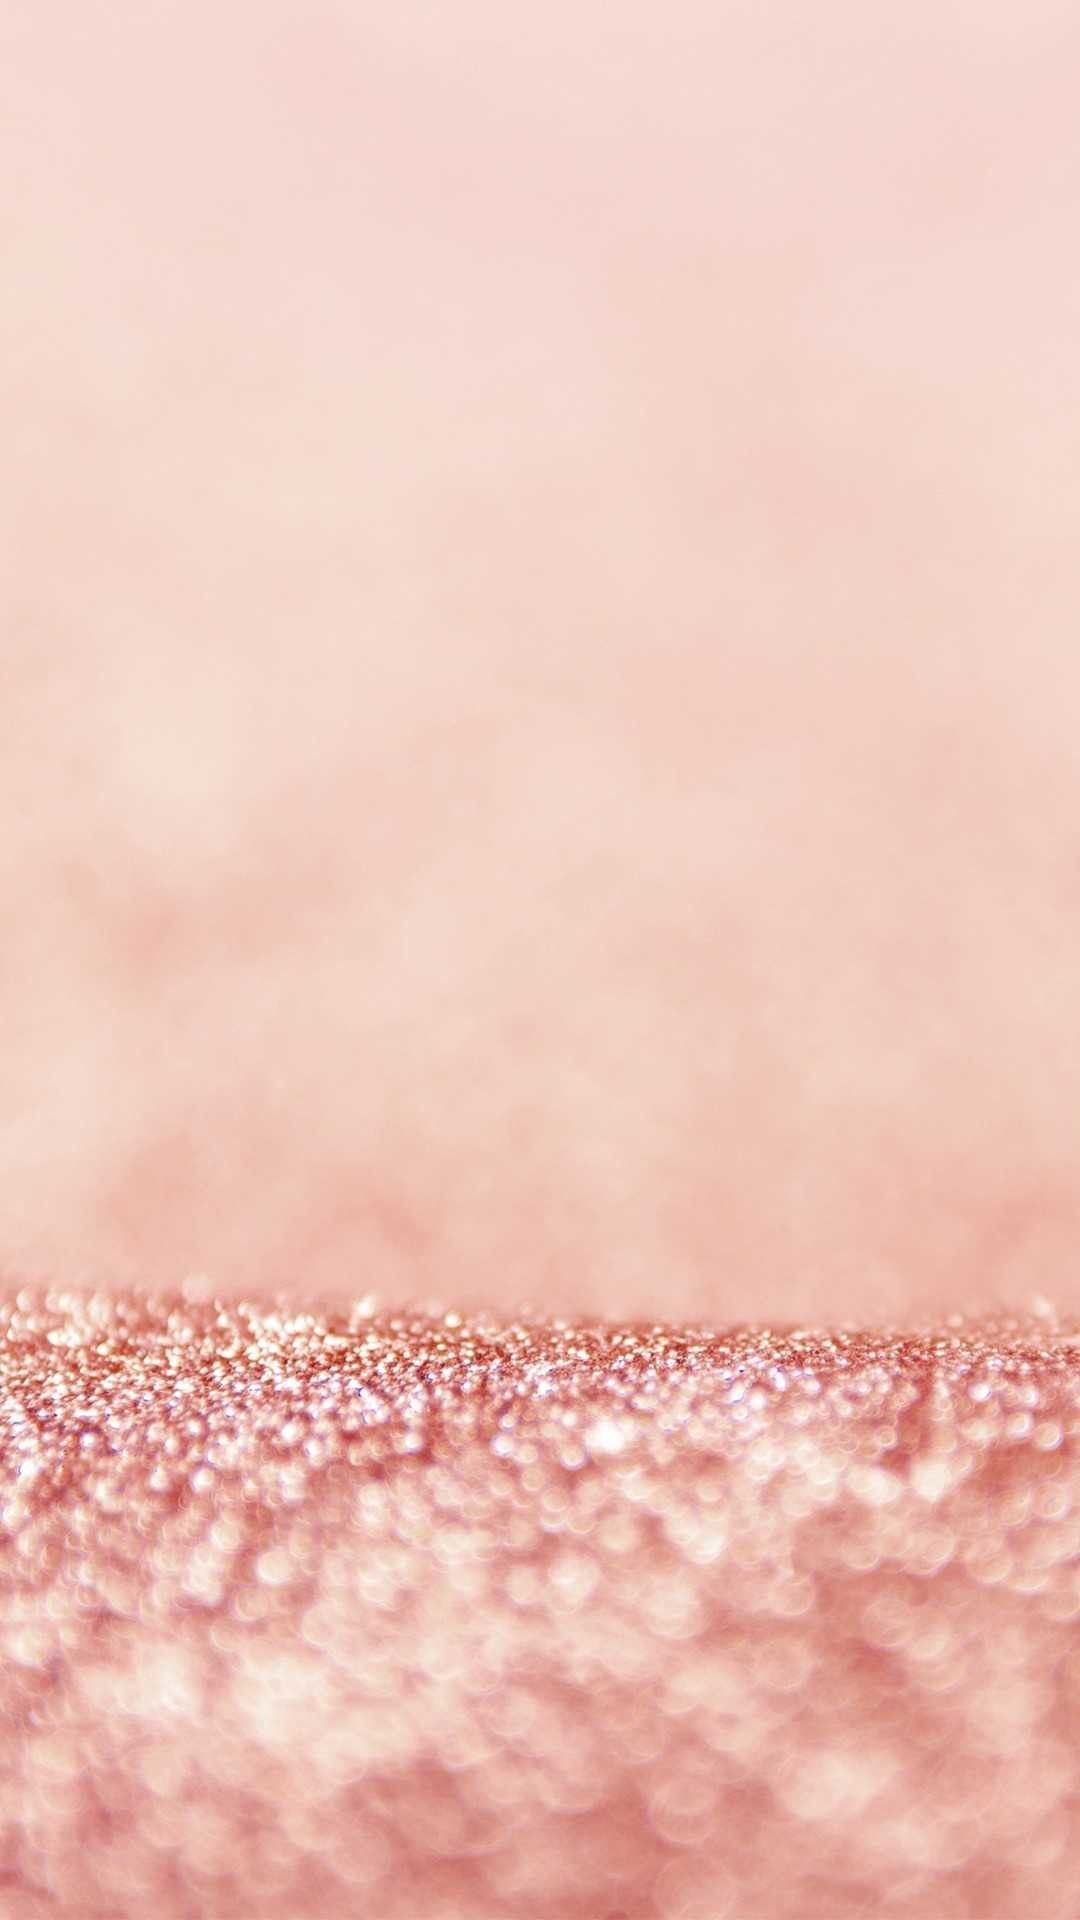 Pink Gold Wallpaper iPhone. Rose gold wallpaper iphone, Rose gold glitter wallpaper, Rose gold aesthetic